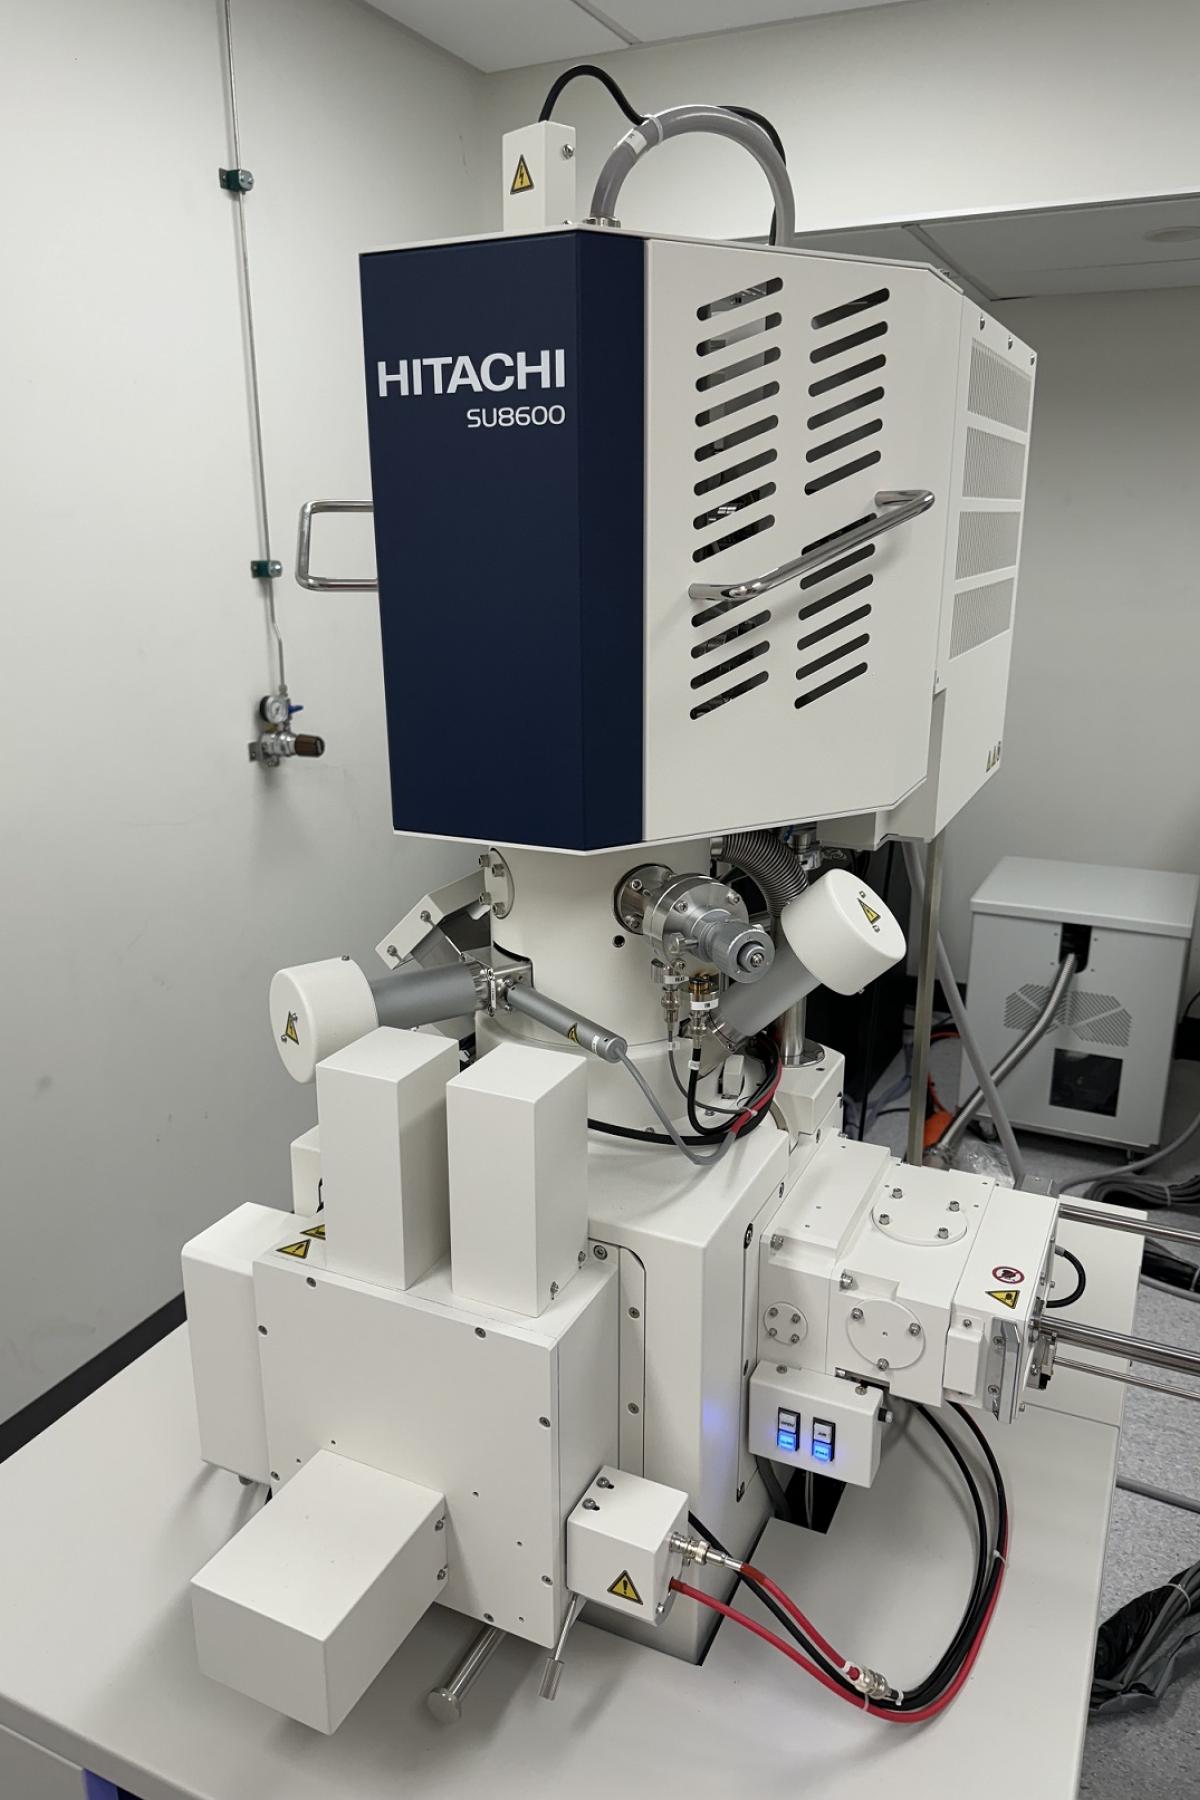 Hitachi SU8600 image